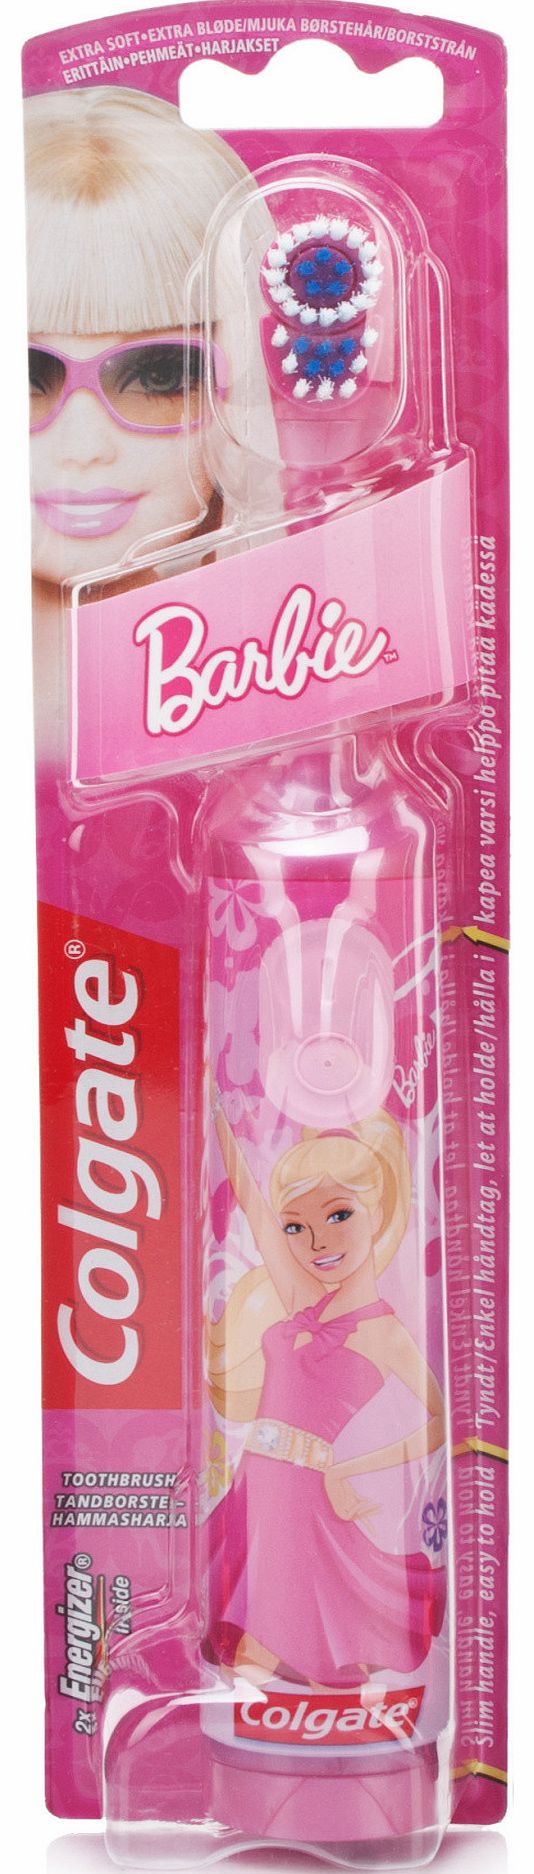 Barbie Kids Battery Tootbrush